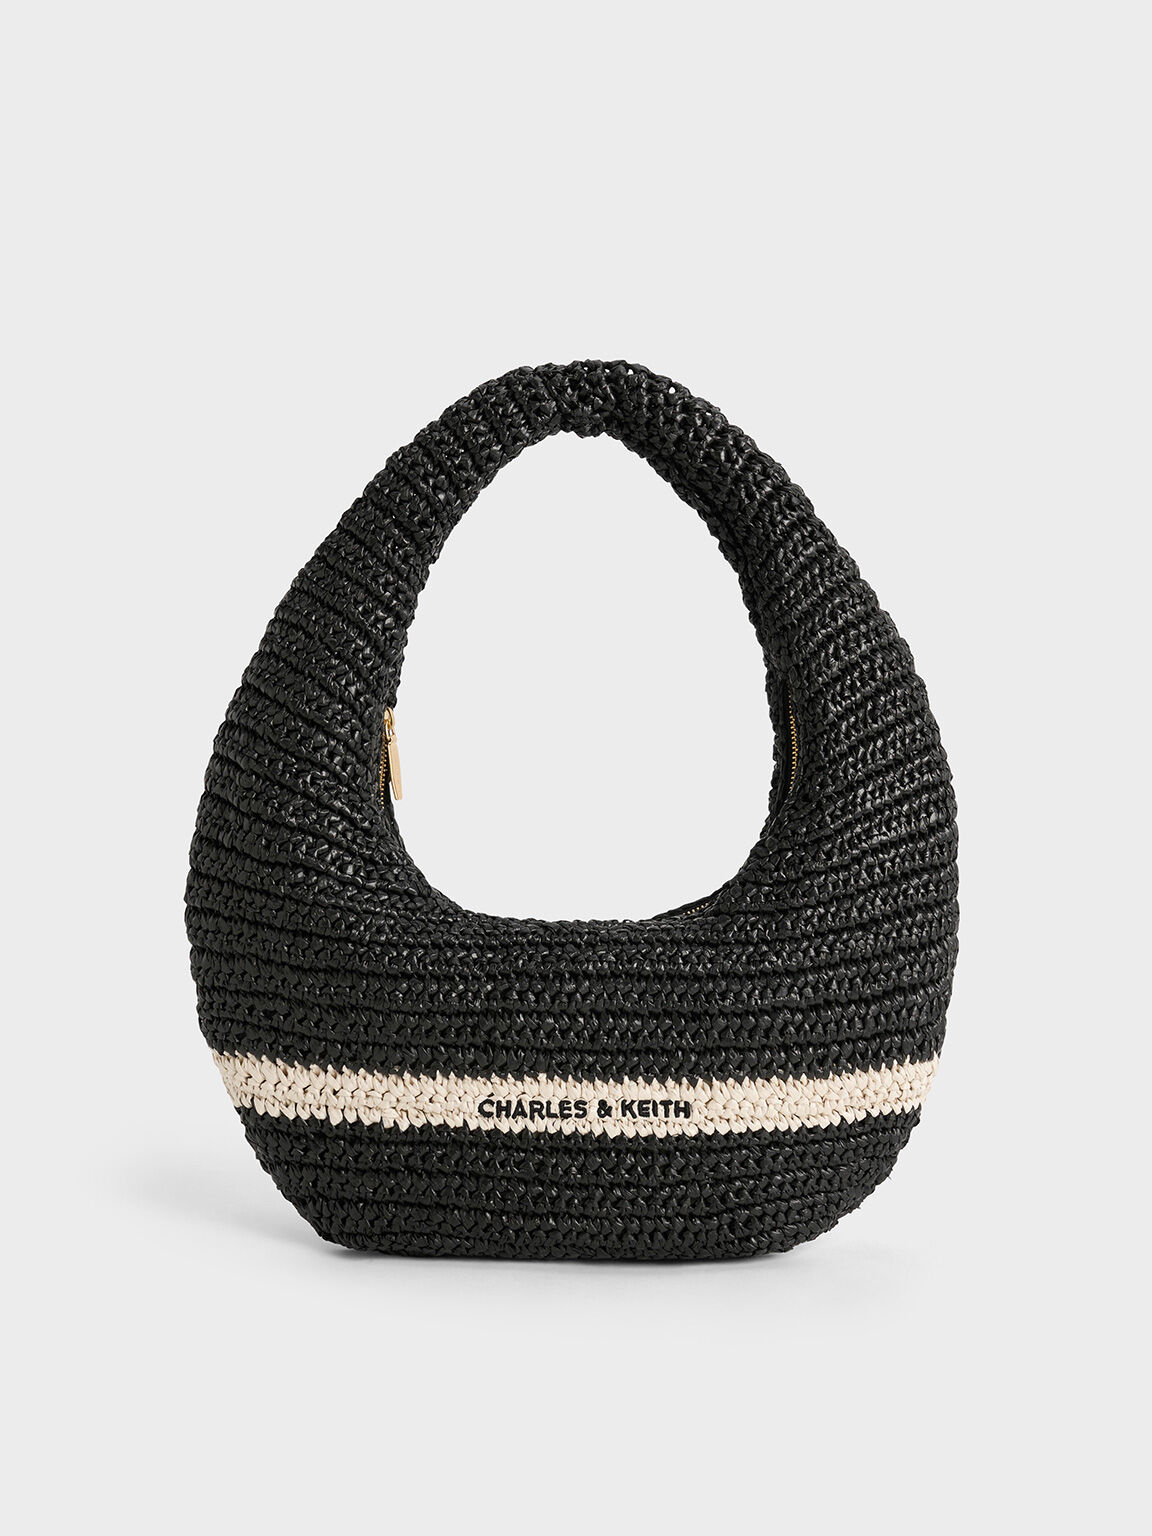 Allegra Knitted Slouchy Hobo Bag, Black, hi-res